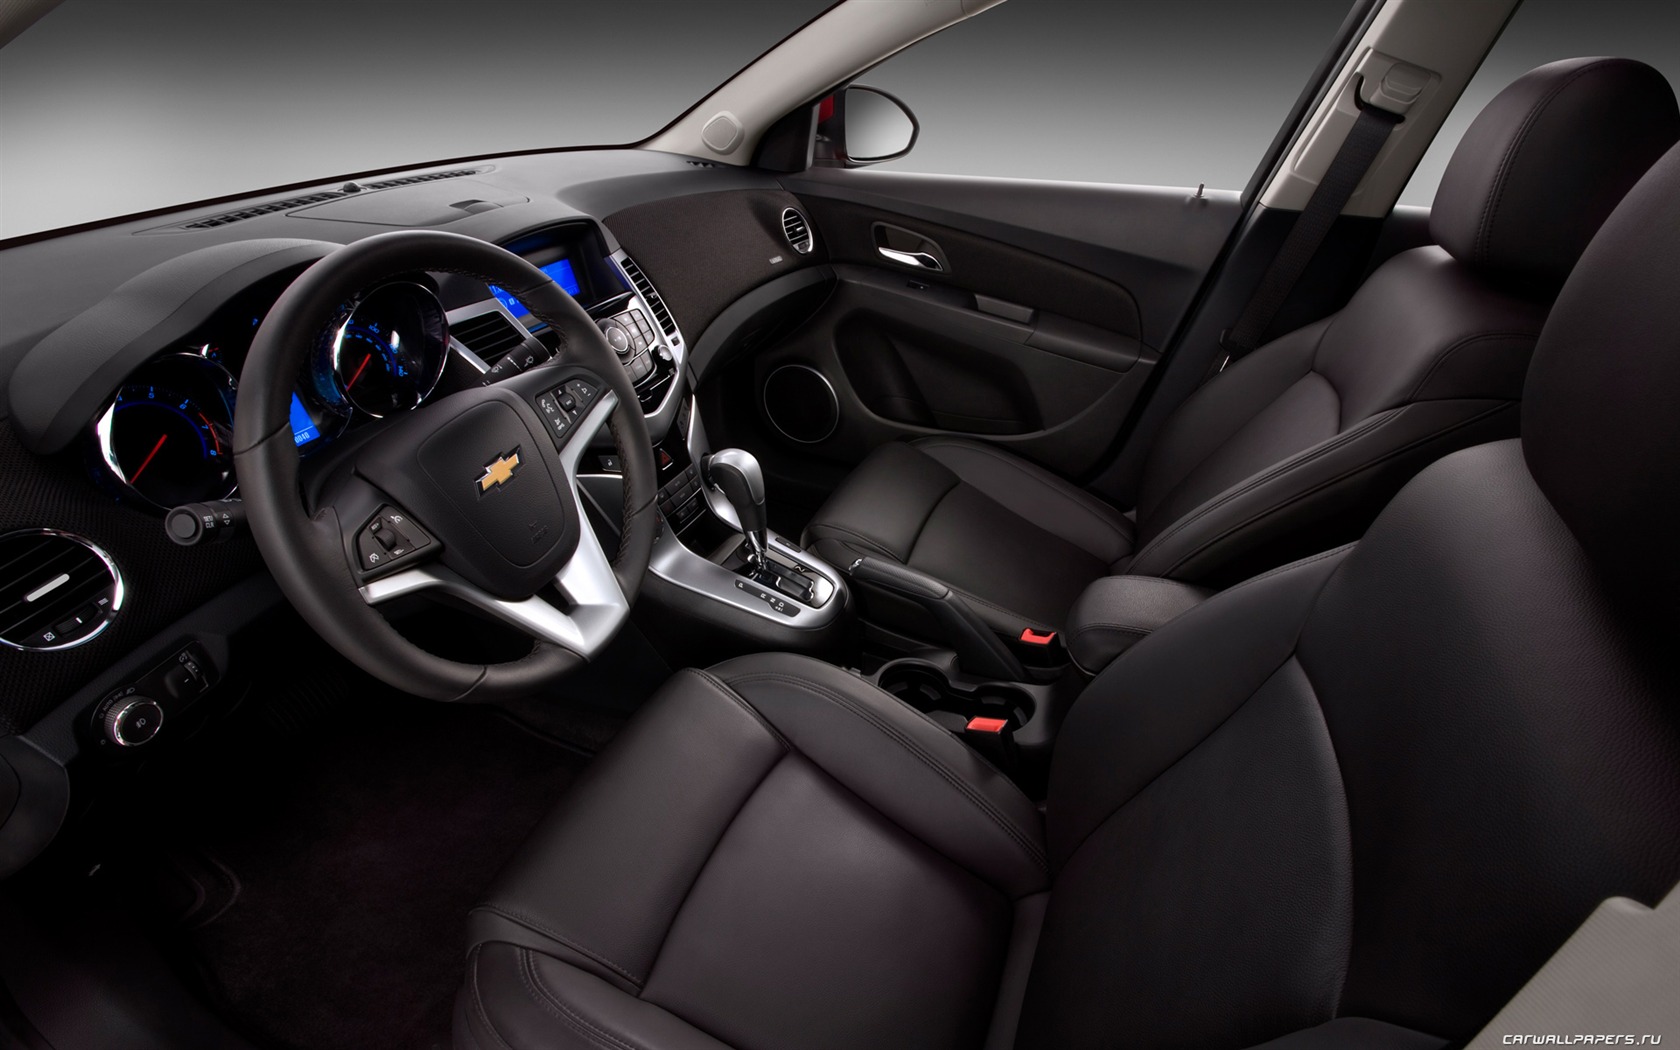 Chevrolet Cruze RS - 2011 雪佛蘭 #13 - 1680x1050